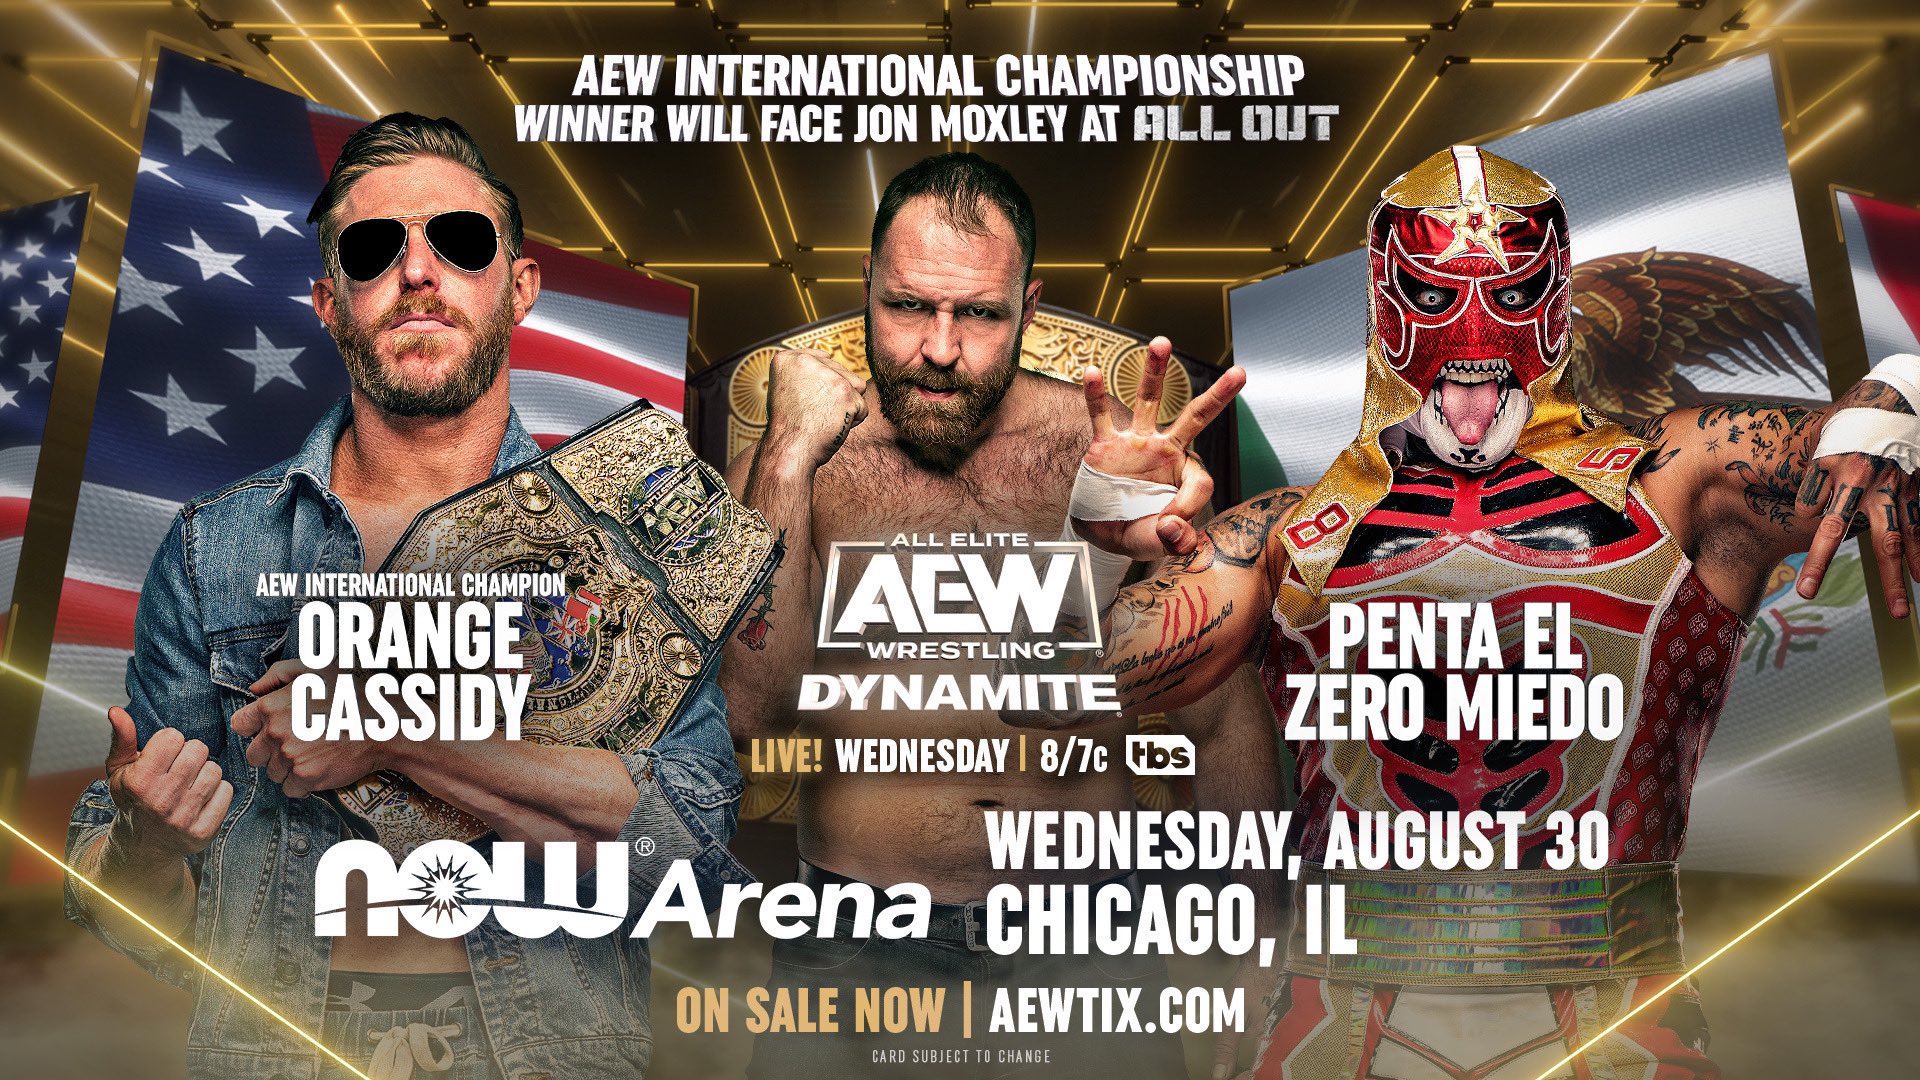 AEW Dynamite match graphic featuring Penta El Zero Miedo and Orange Cassidy.